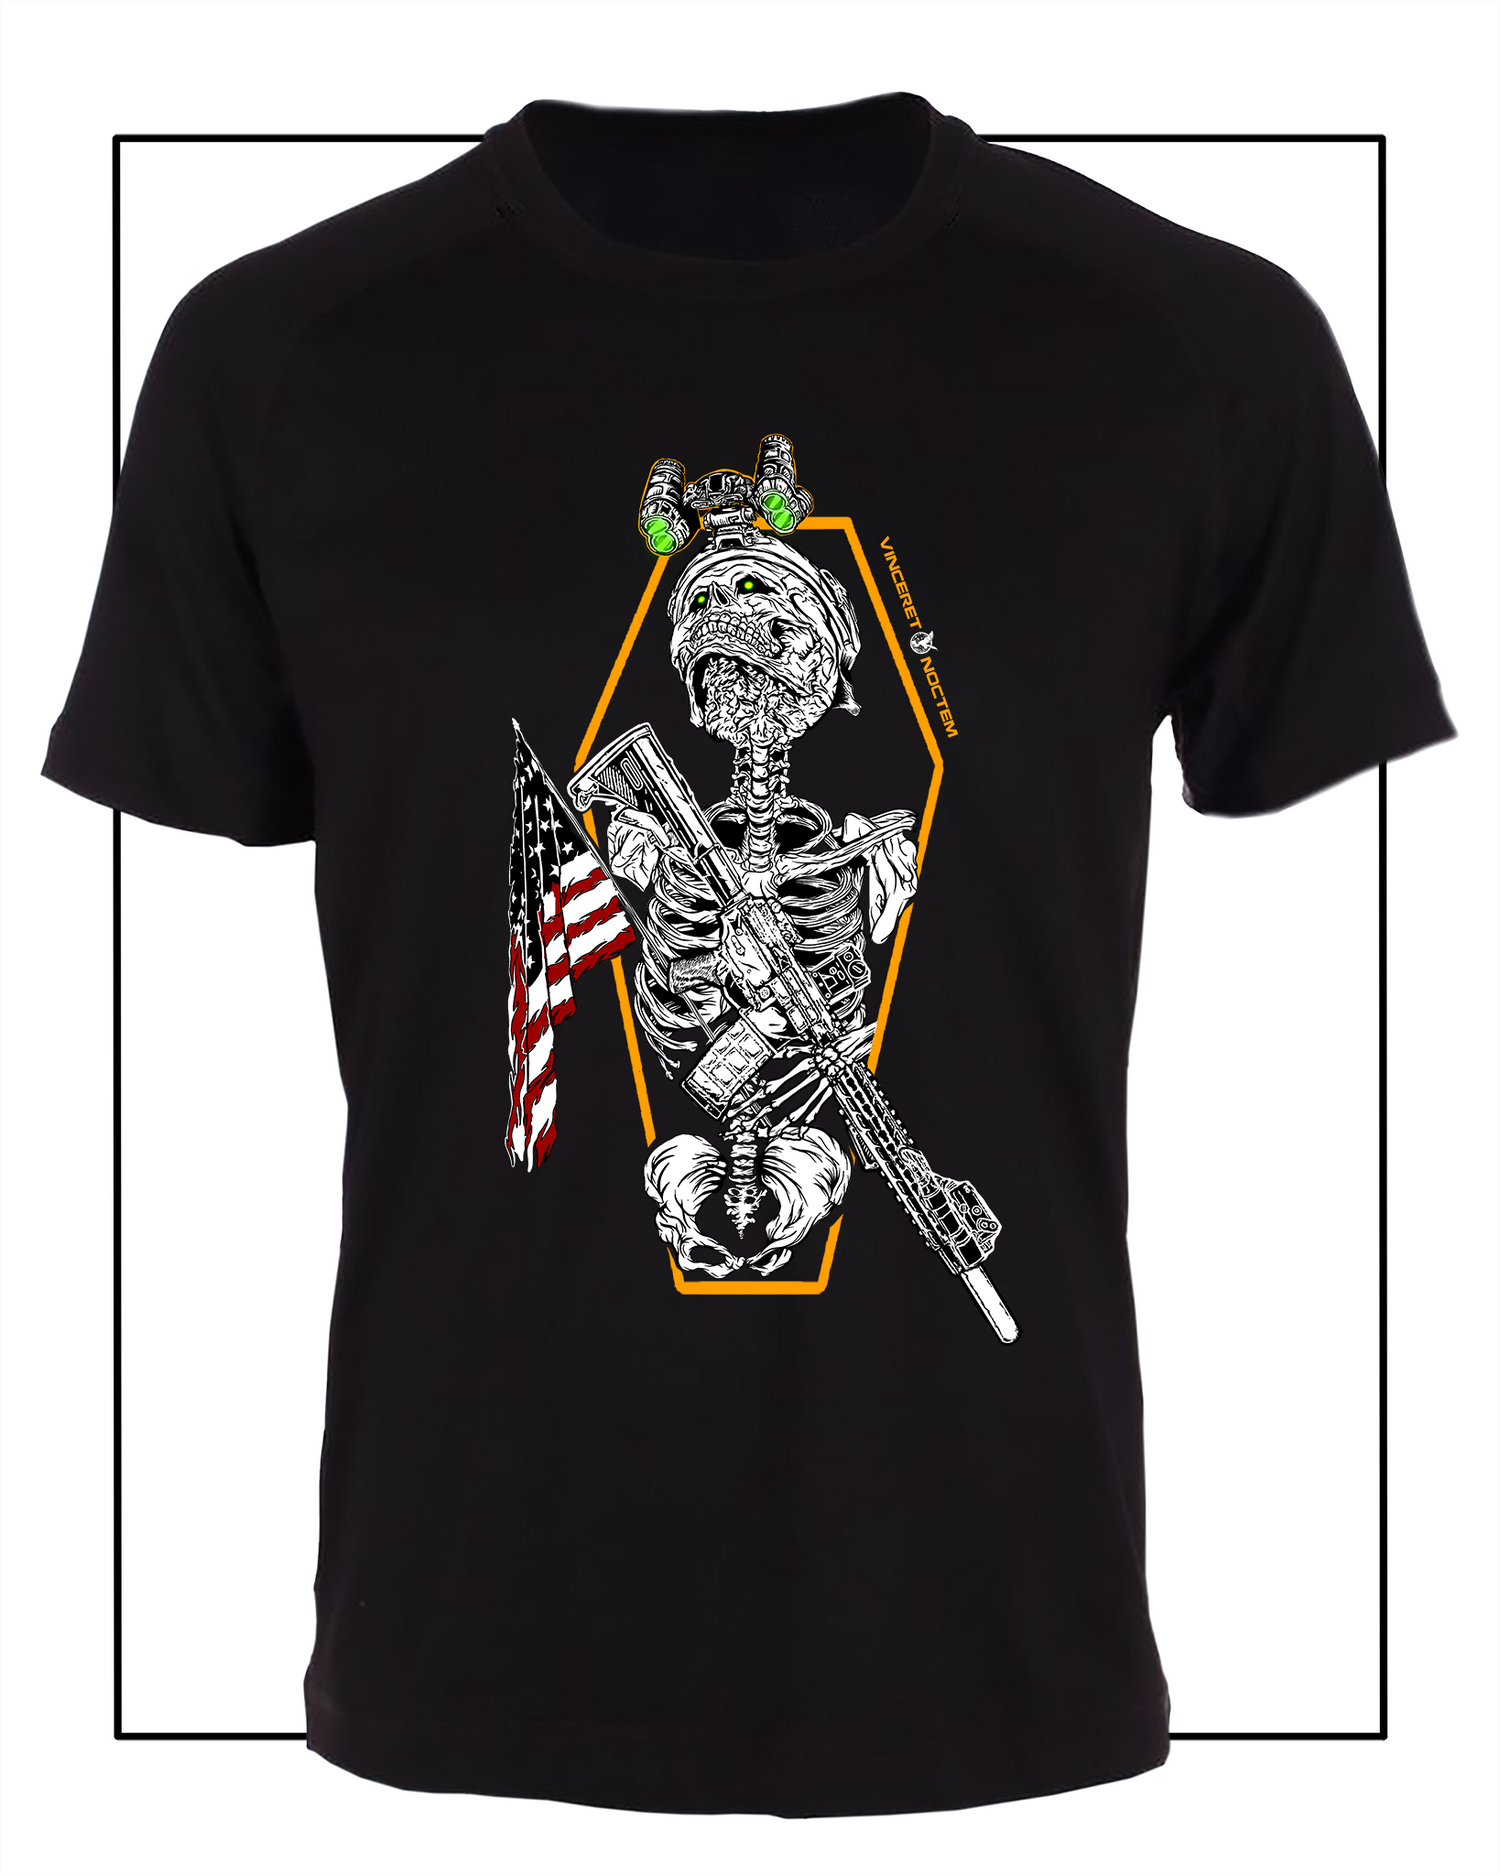 Liberty Or Death T-shirt